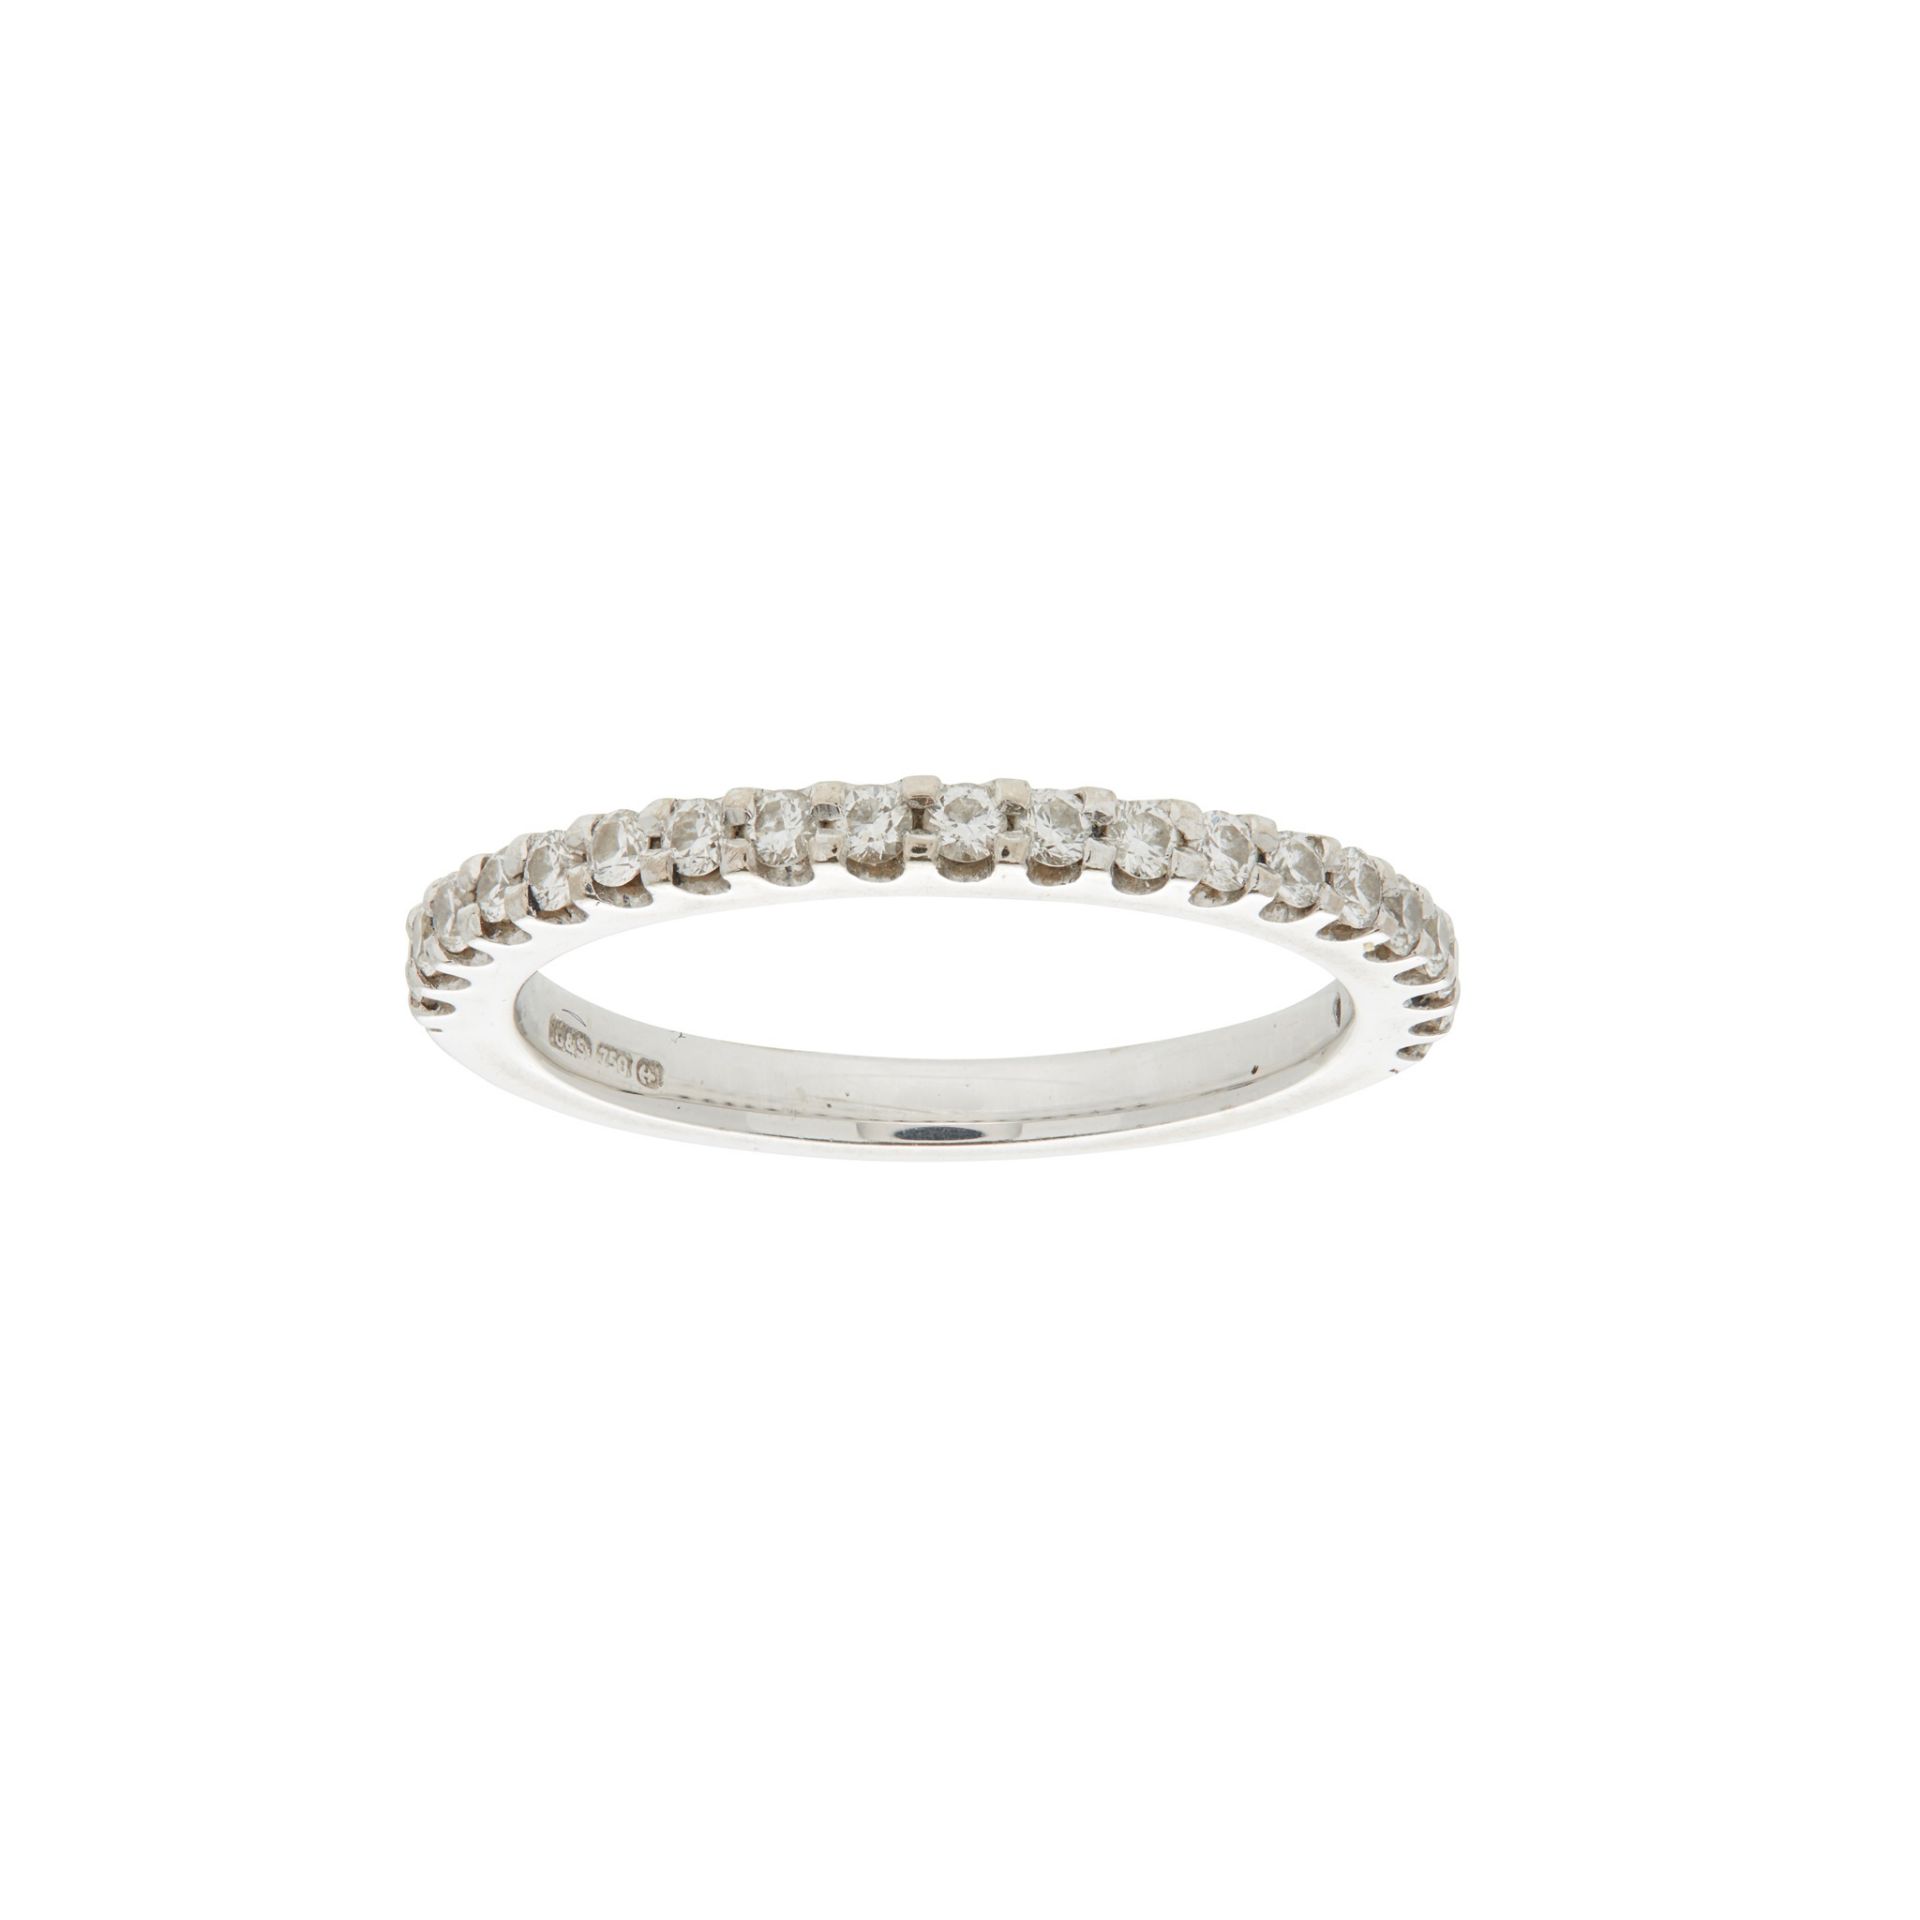 A single stone diamond set ring - Image 2 of 3